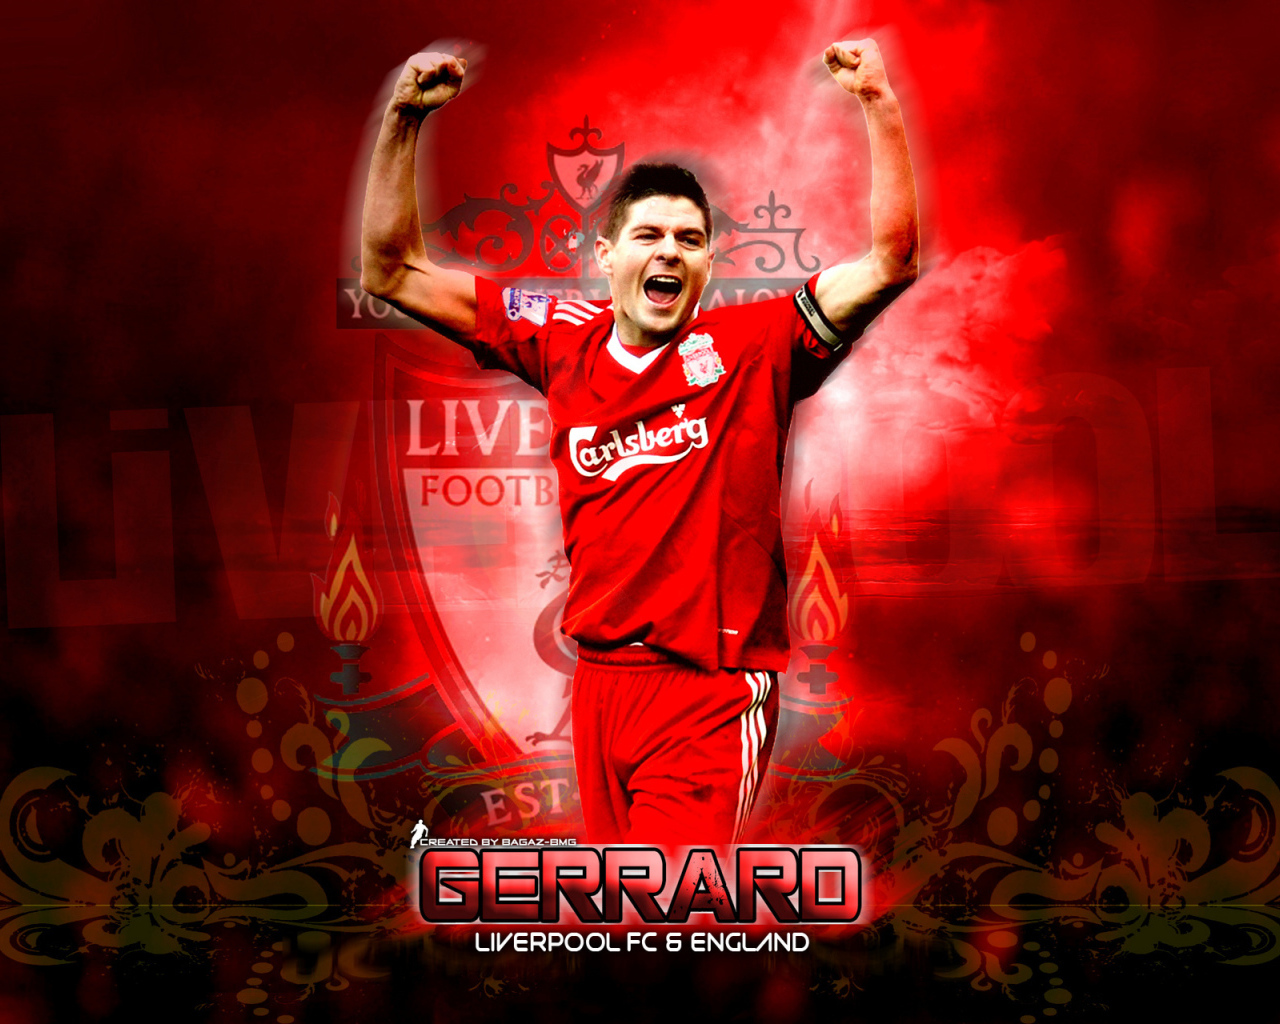 The football player of Liverpool Steven Gerrard